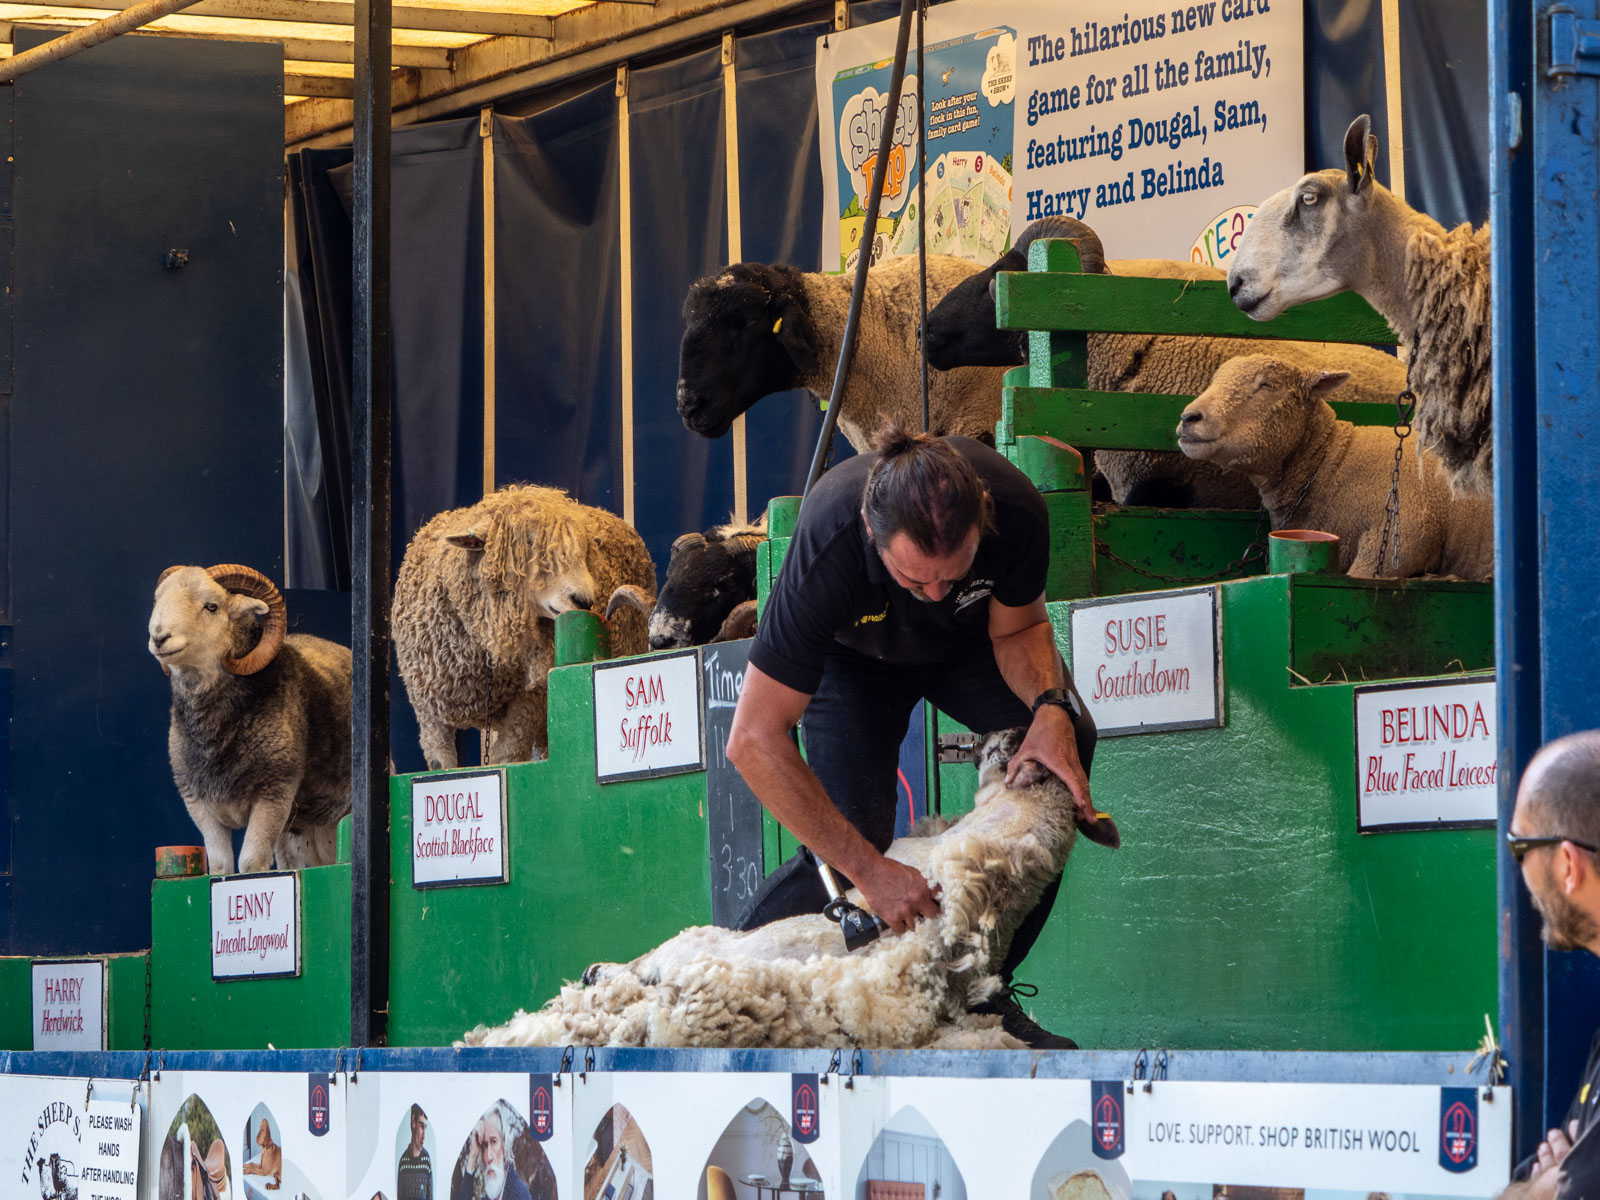 Sheep-shearing demonstration, Carol Clarke